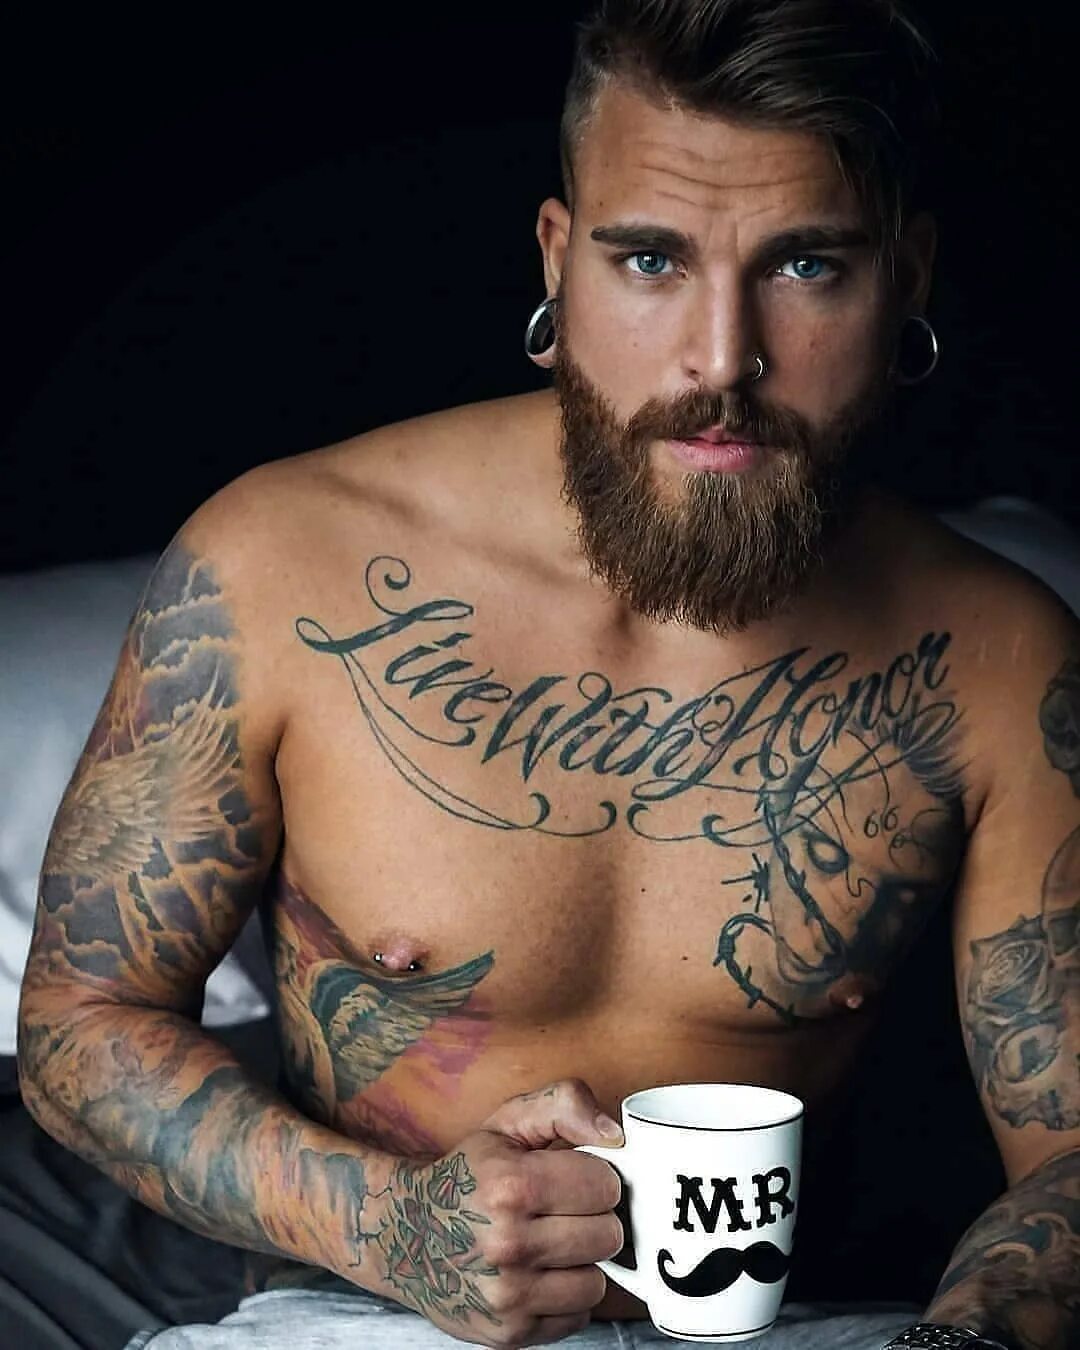 beard & tattoo, beardlifestyle on Instagram: "Perfect shot 👌 (swi...